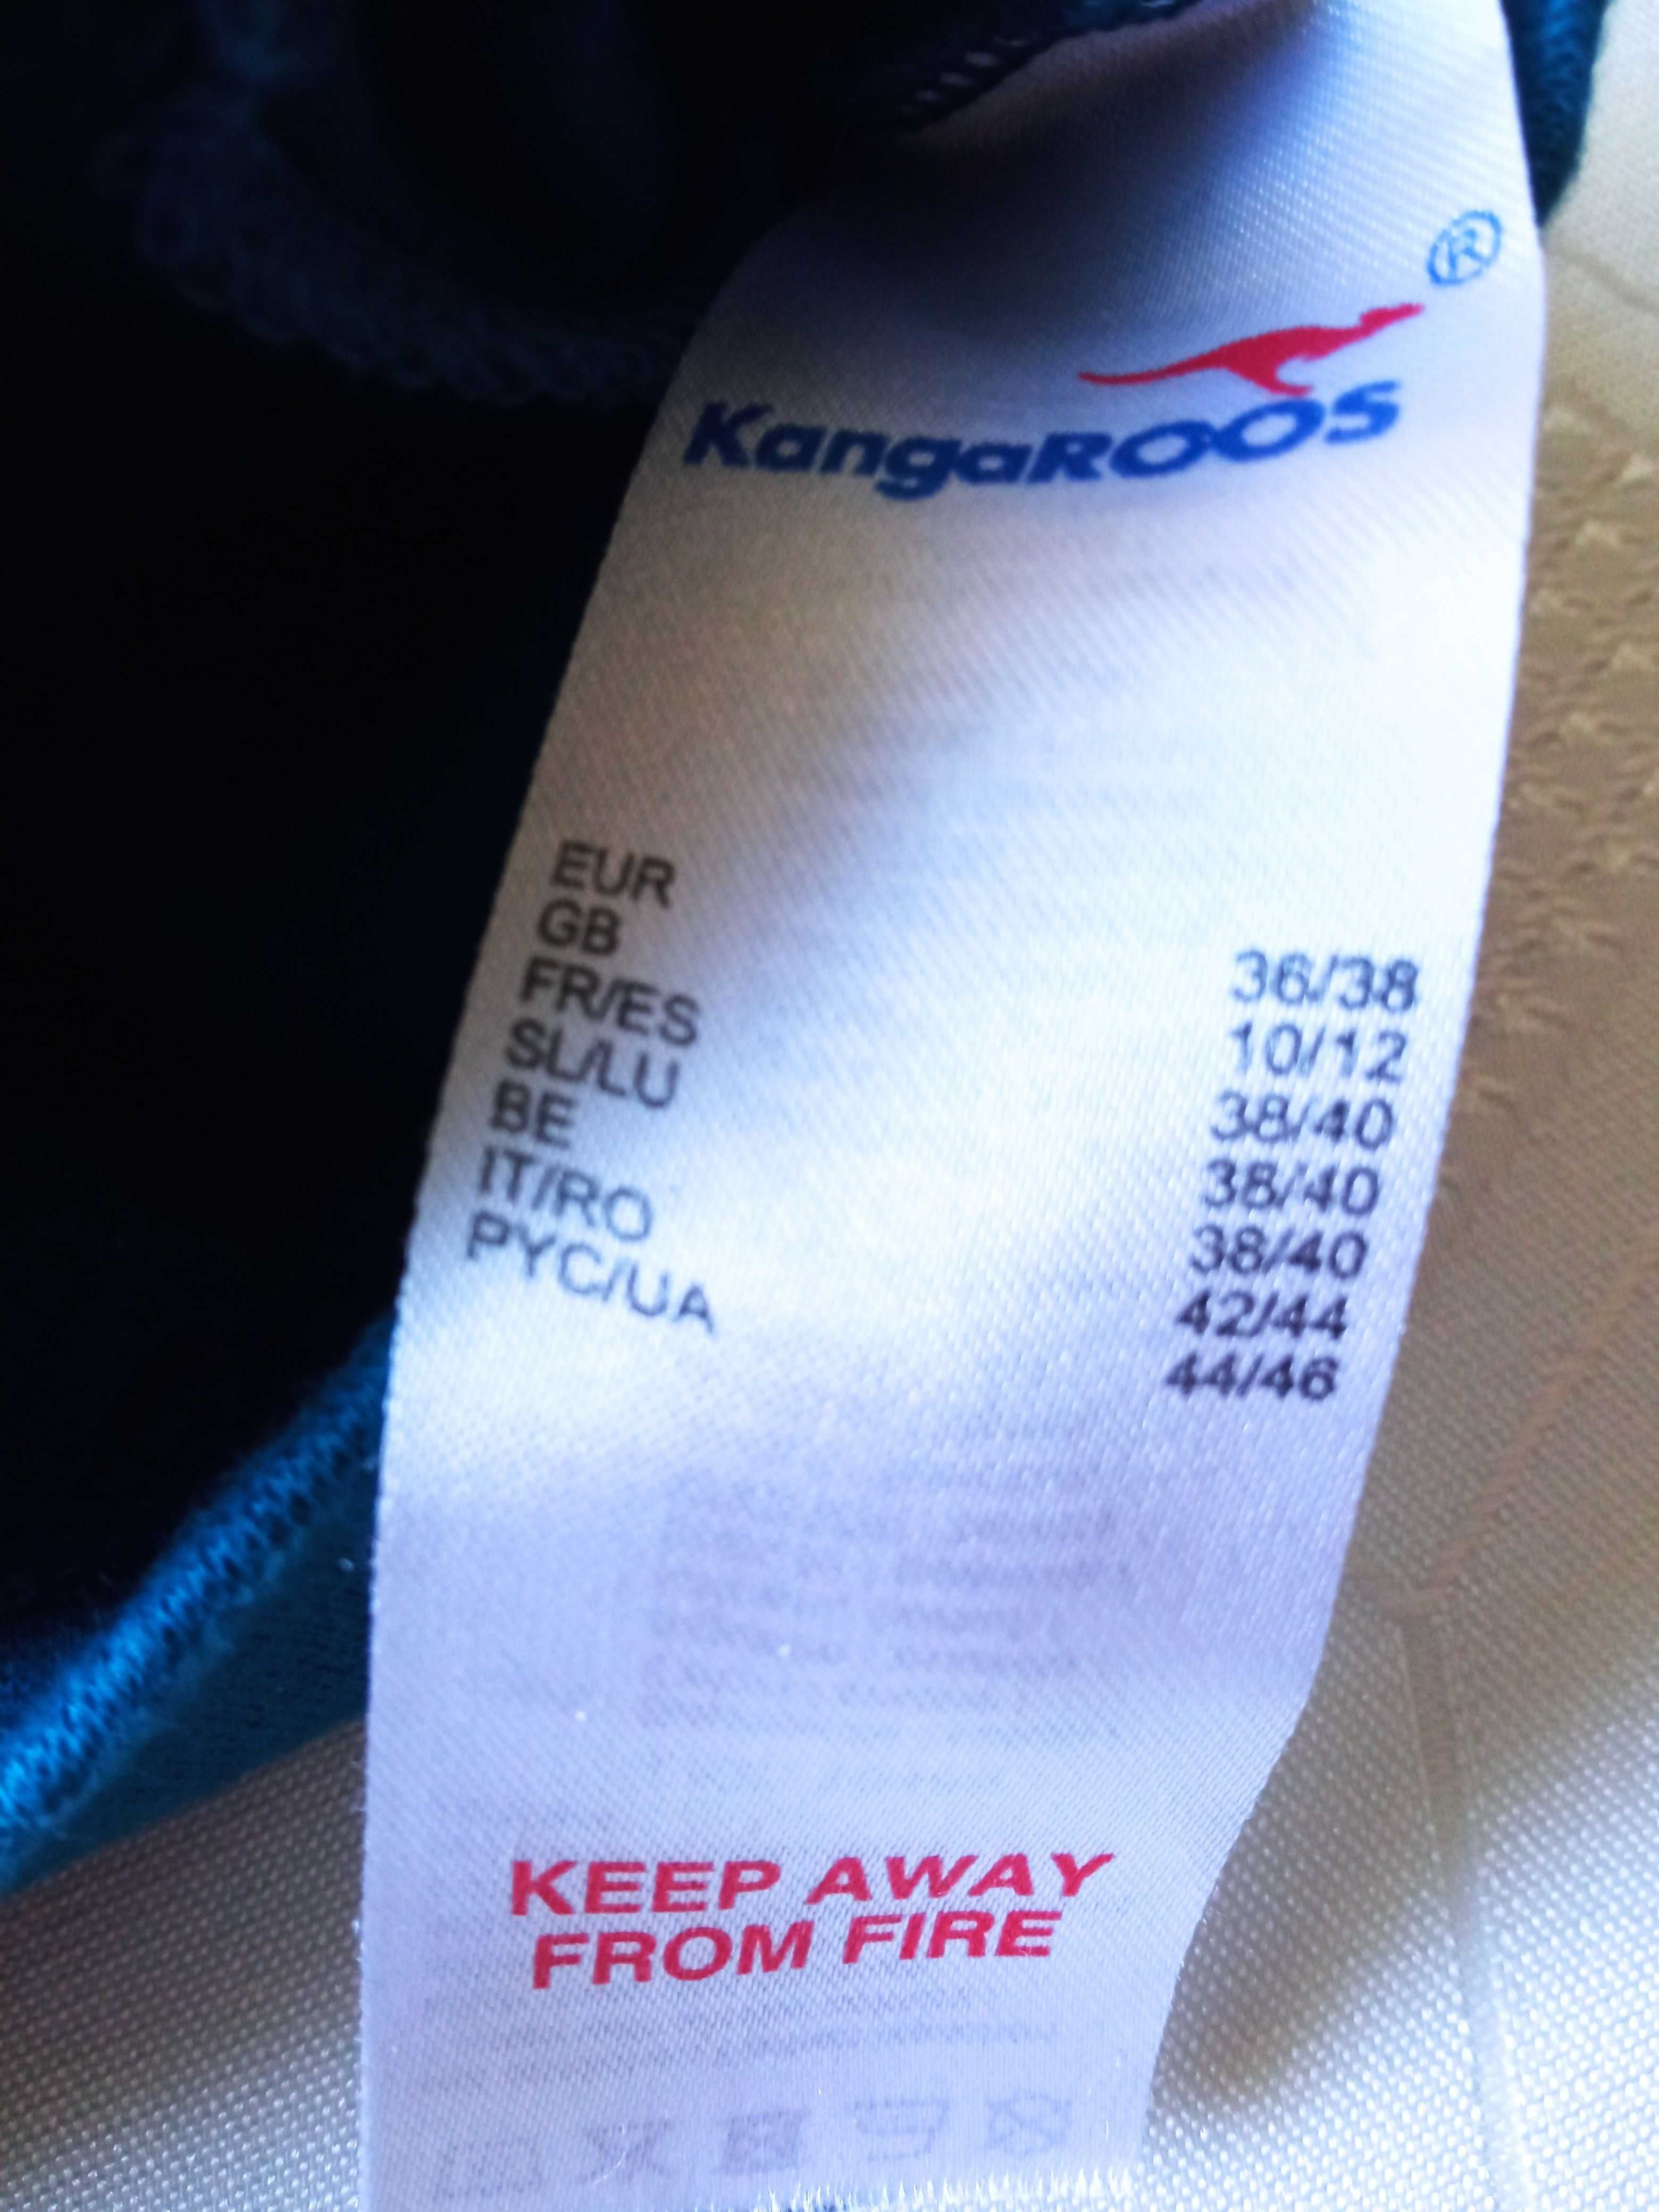 KangaRoos damska bluza rozpinana r 34/36